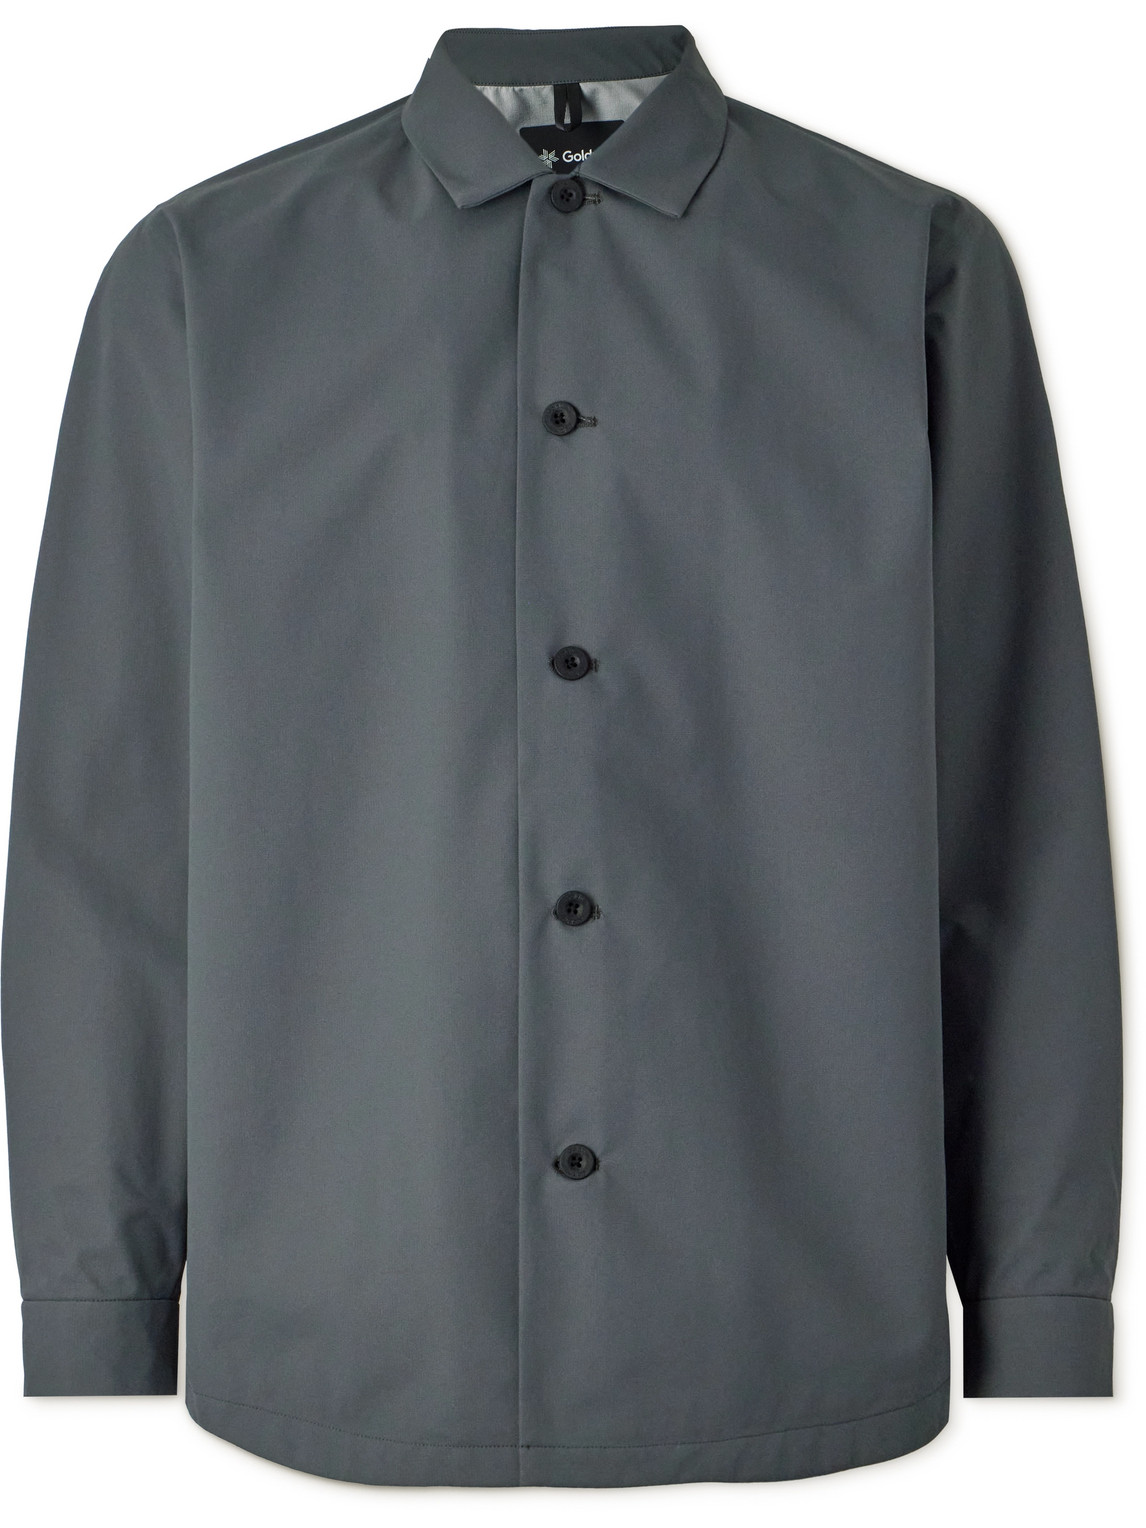 Goldwin Pertex® Shield Air Shirt Jacket In Gray